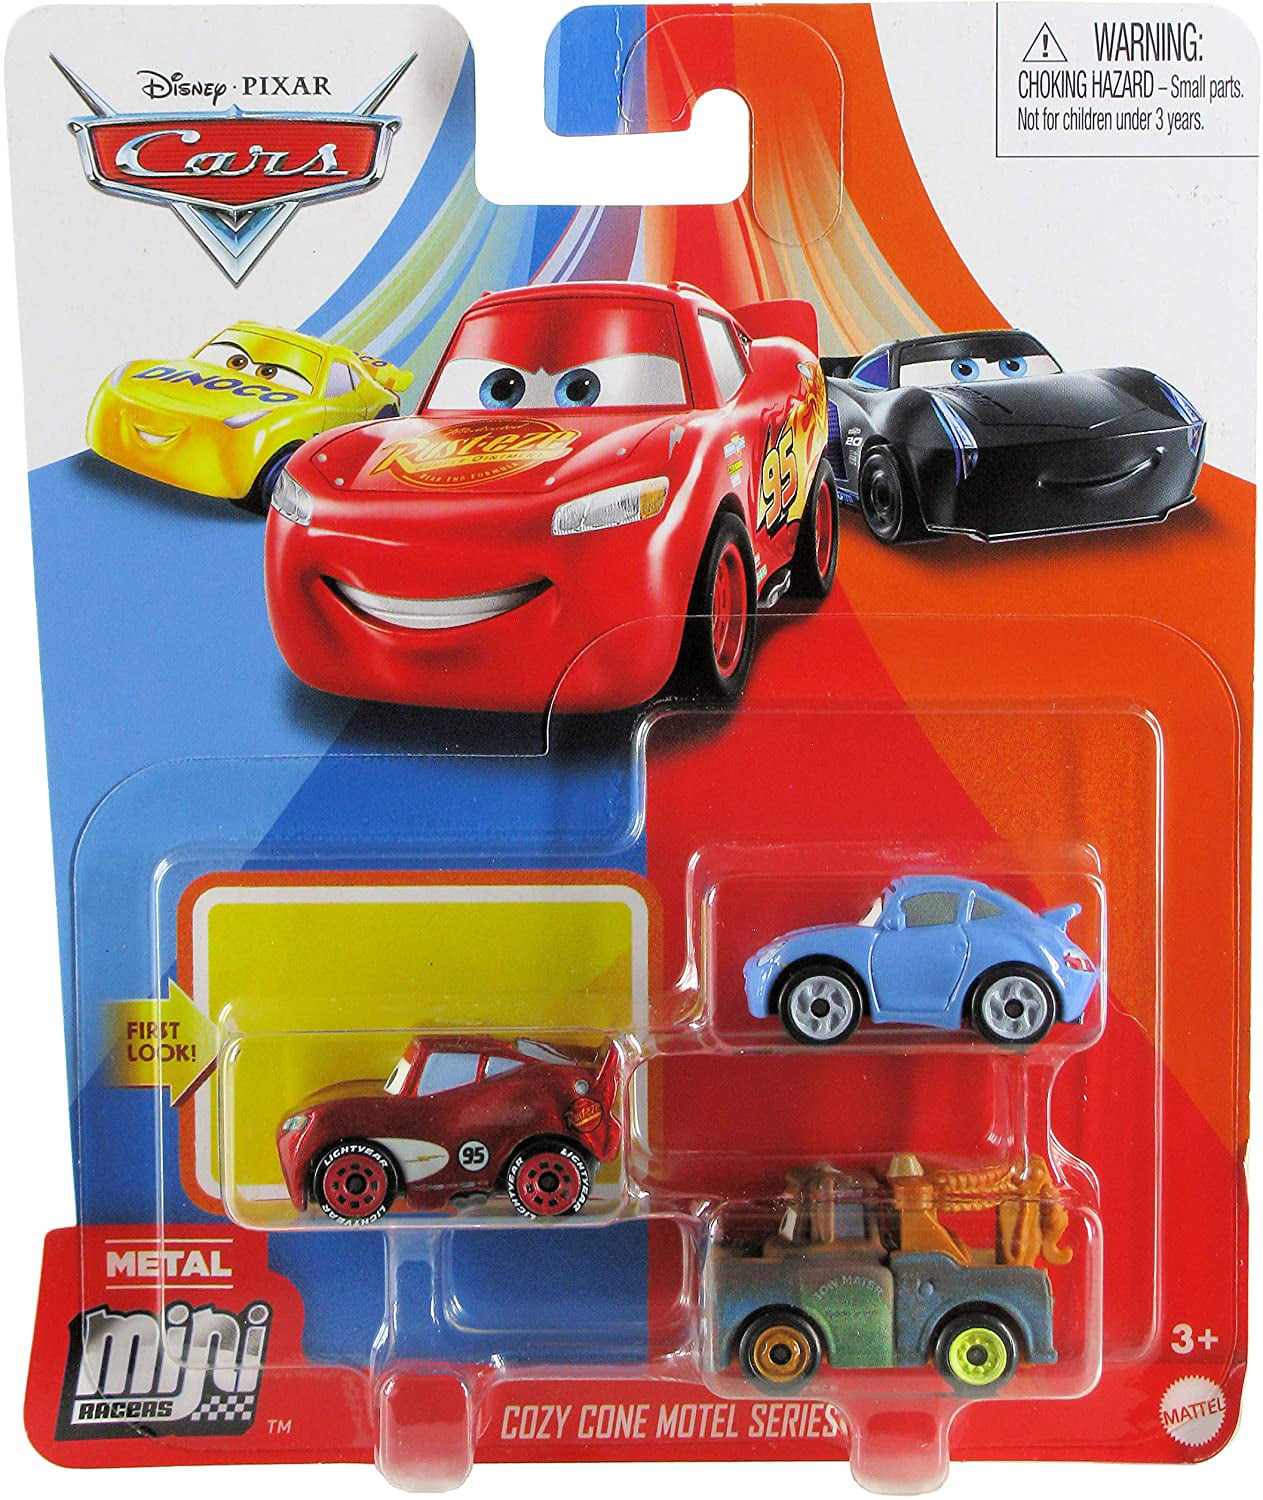 Disney Pixar Cars Lighting McQueen Radiator Springs RACERS DUFFLE Bag NEW $50 